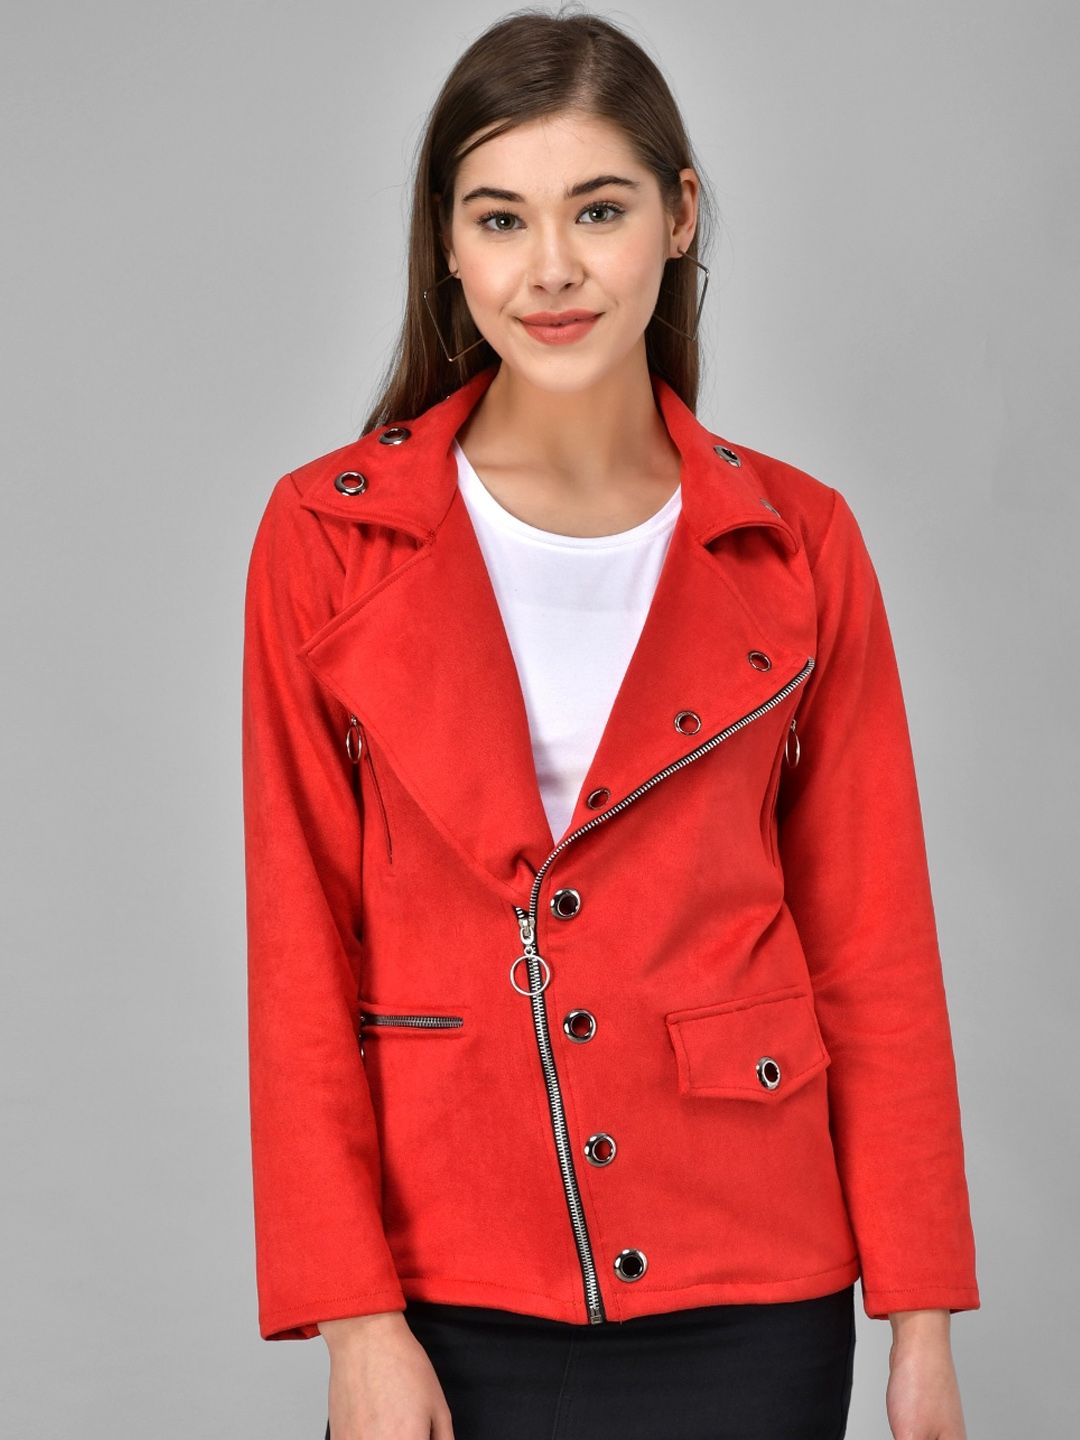 Darzi Women Red Tailored Jacket Price in India